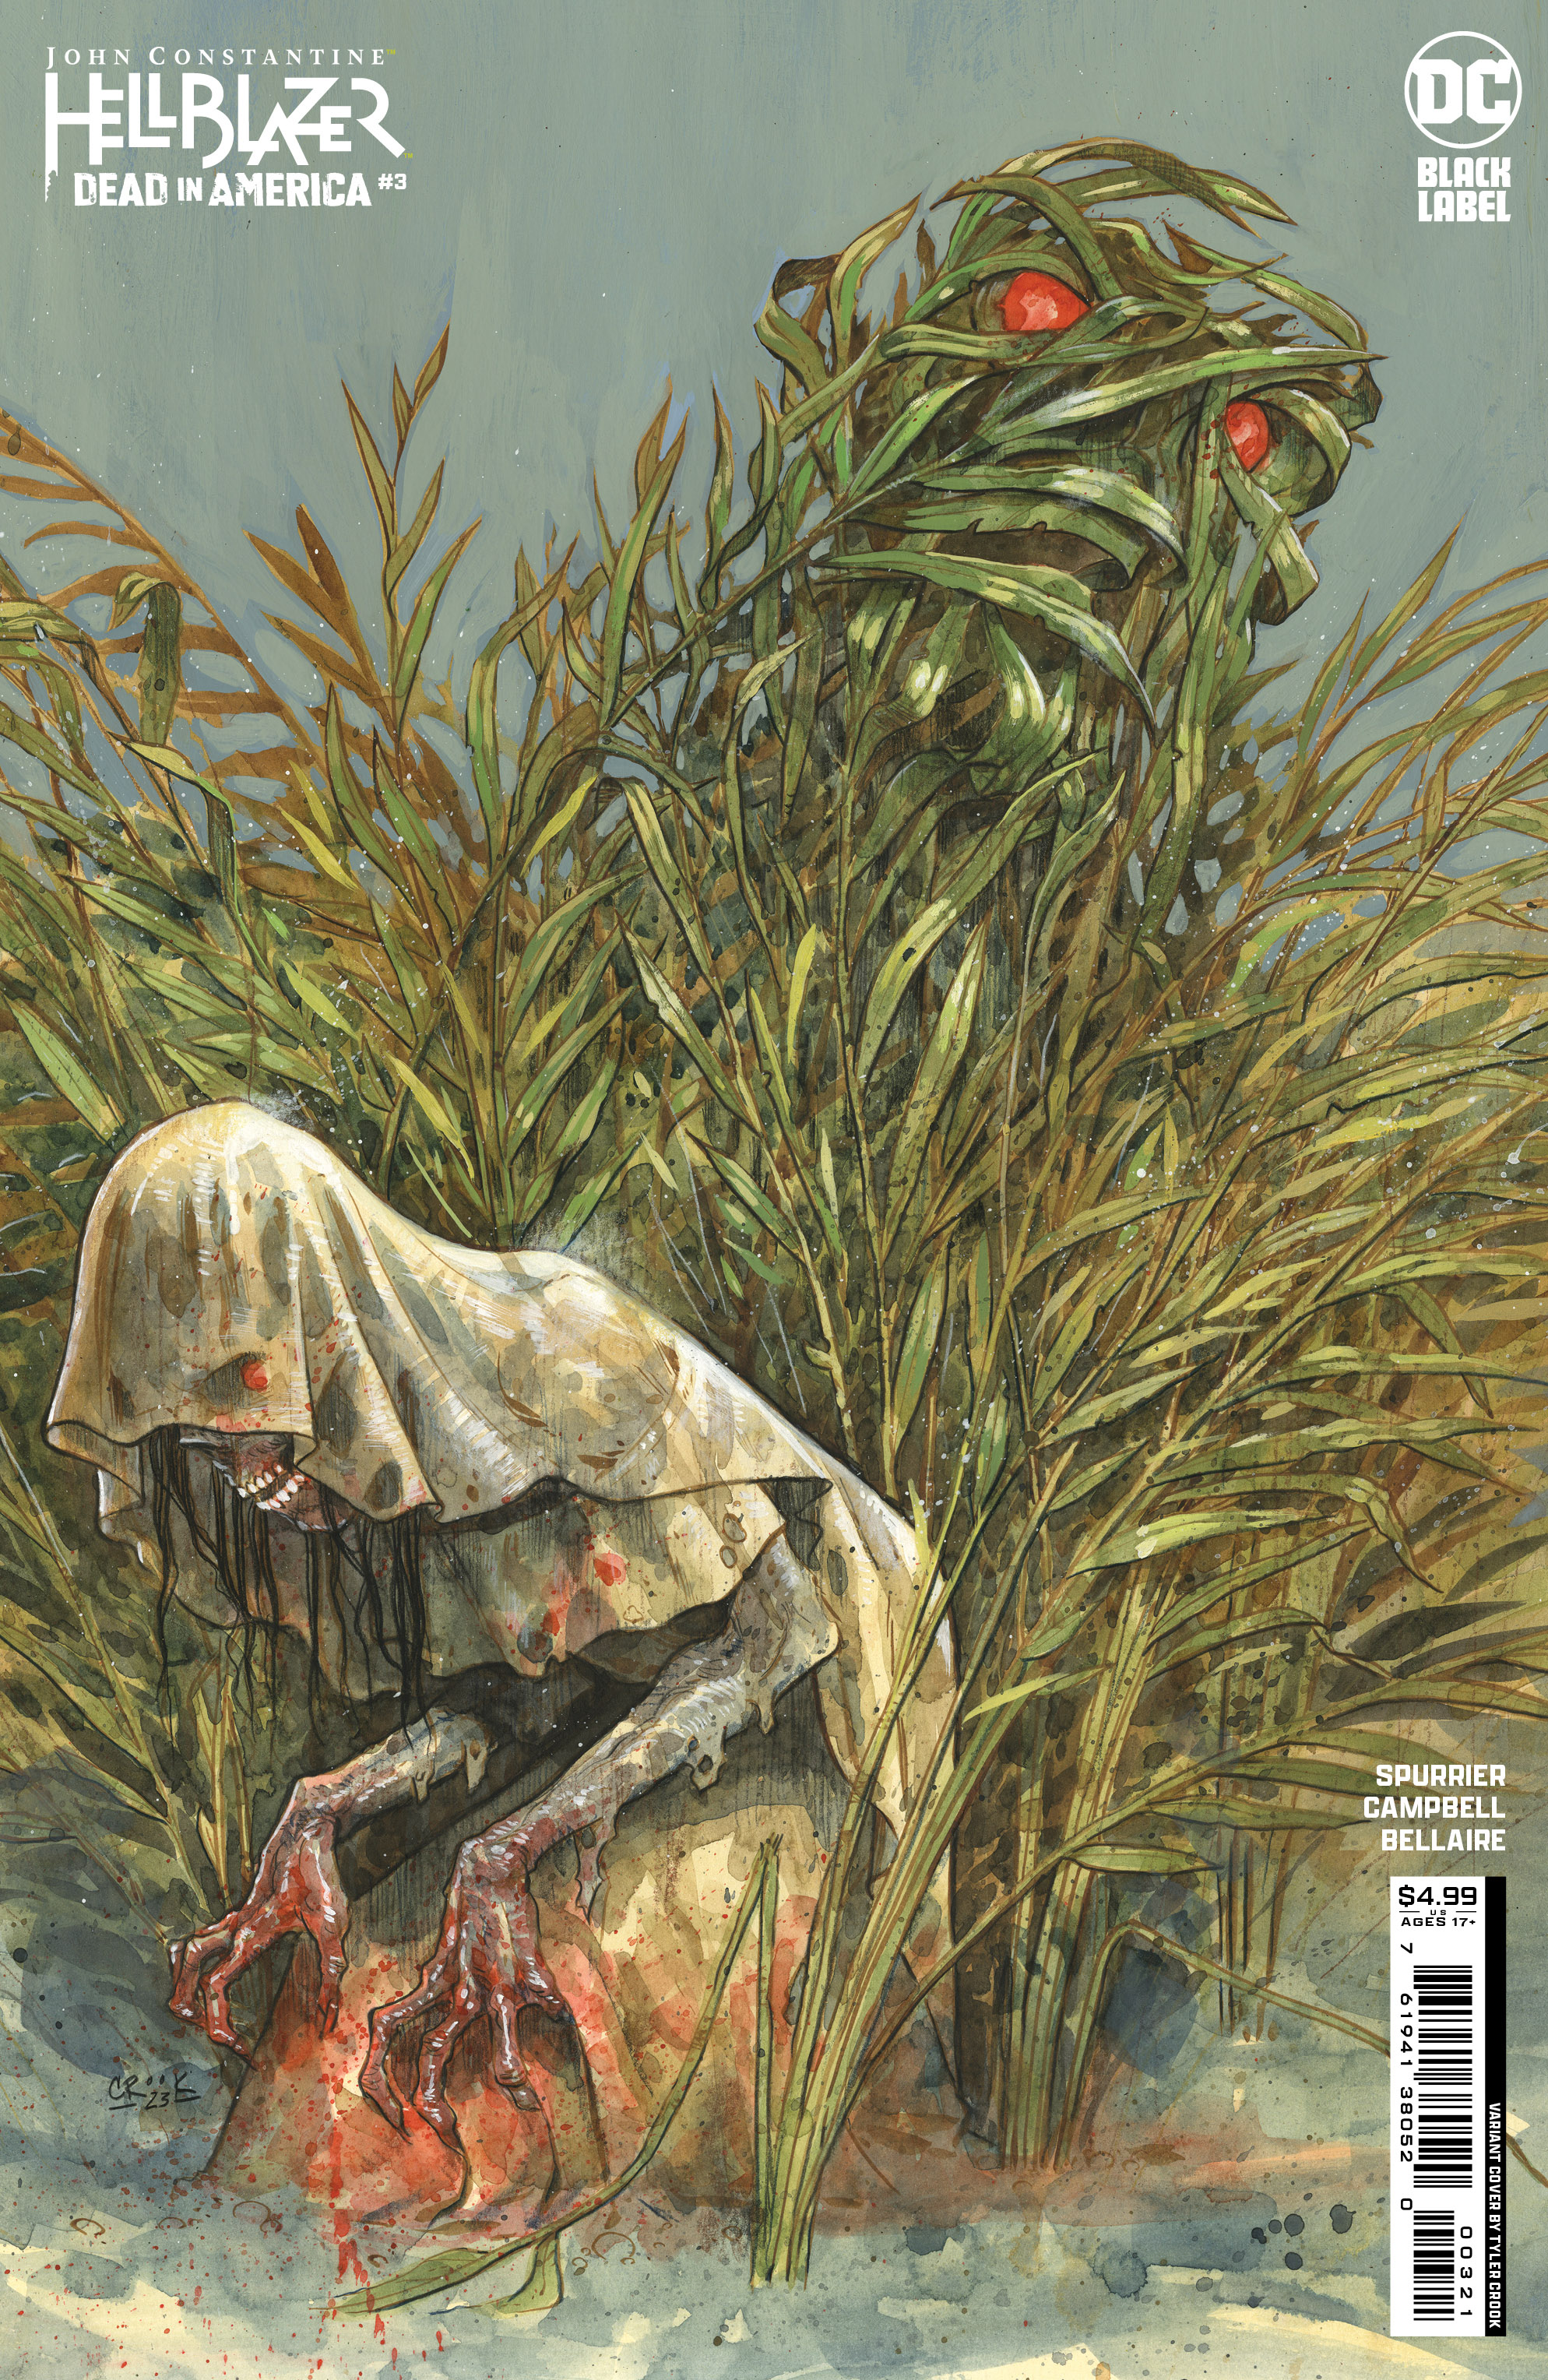 John Constantine, Hellblazer Dead in America #3 Cover B Tyler Crook Variant (Mature) (Of 9)